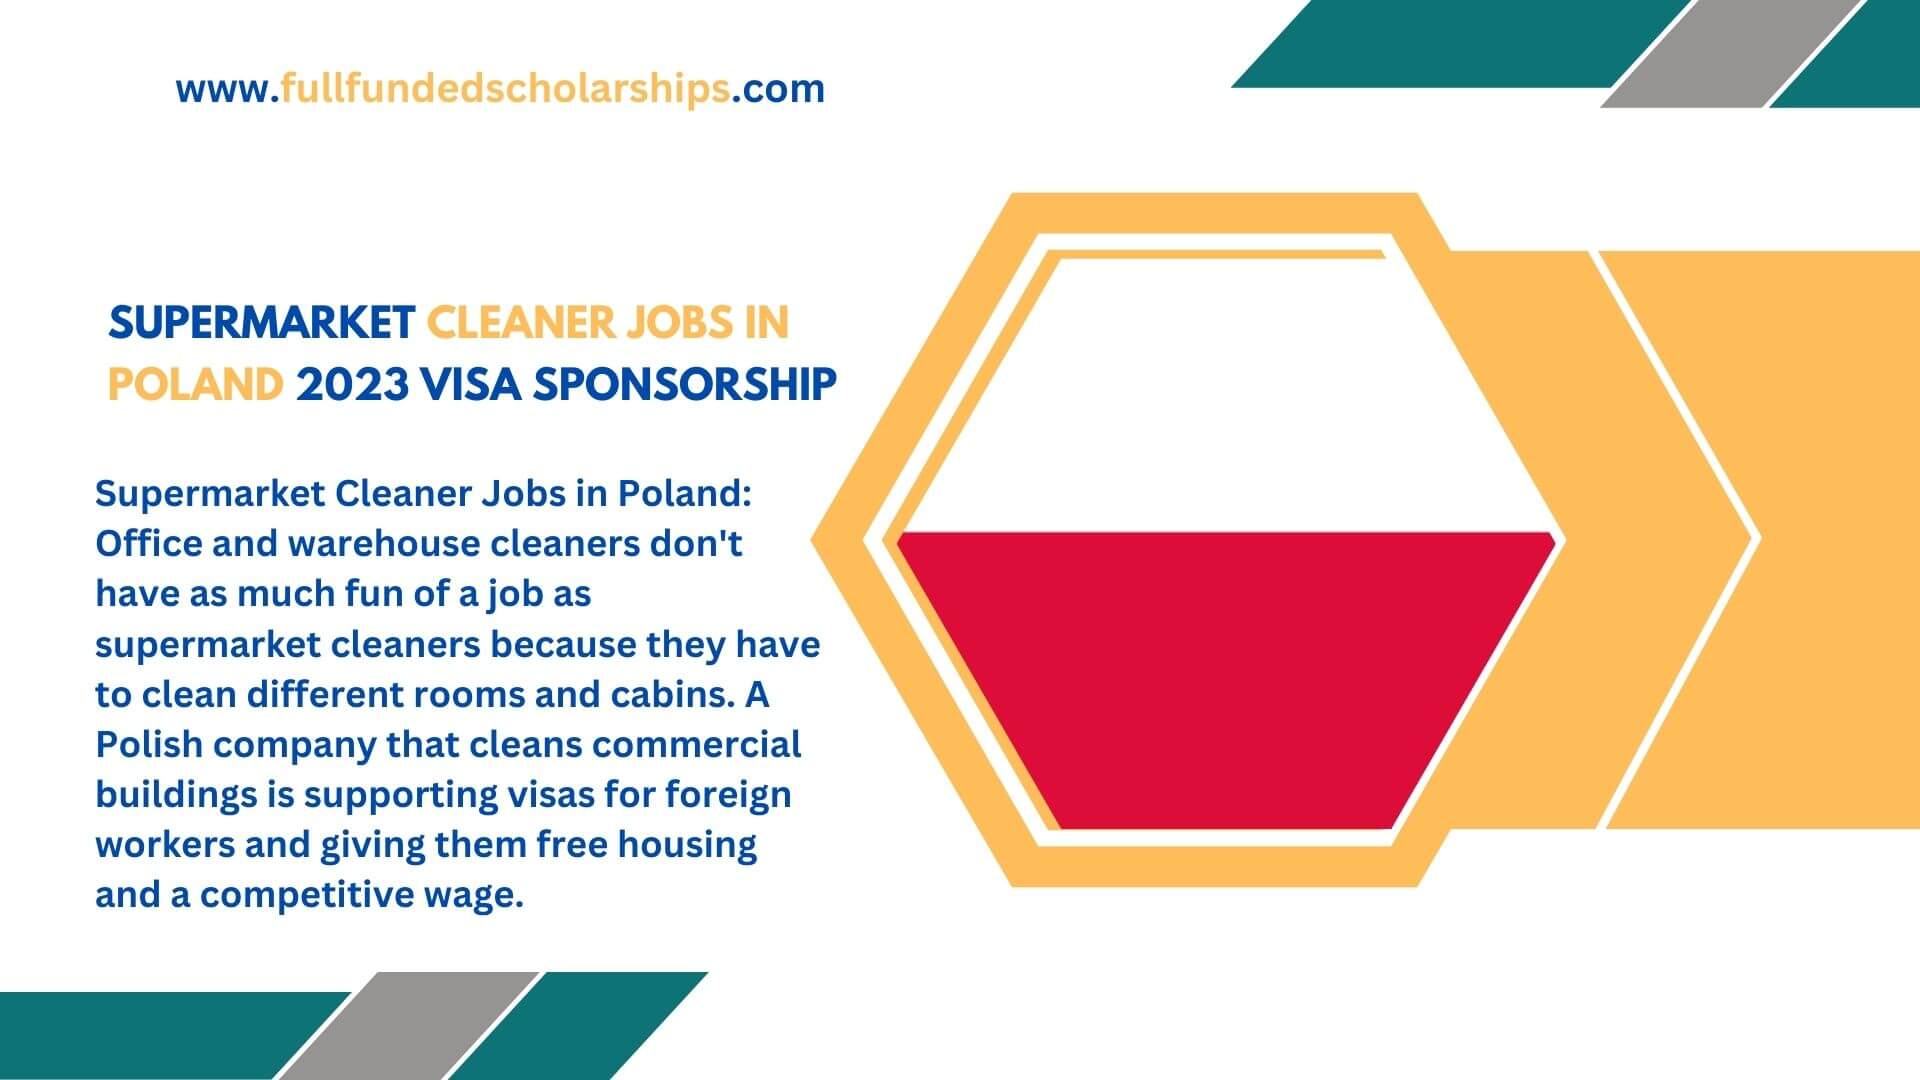 Supermarket Cleaner Jobs in Poland 2023 Visa Sponsorship